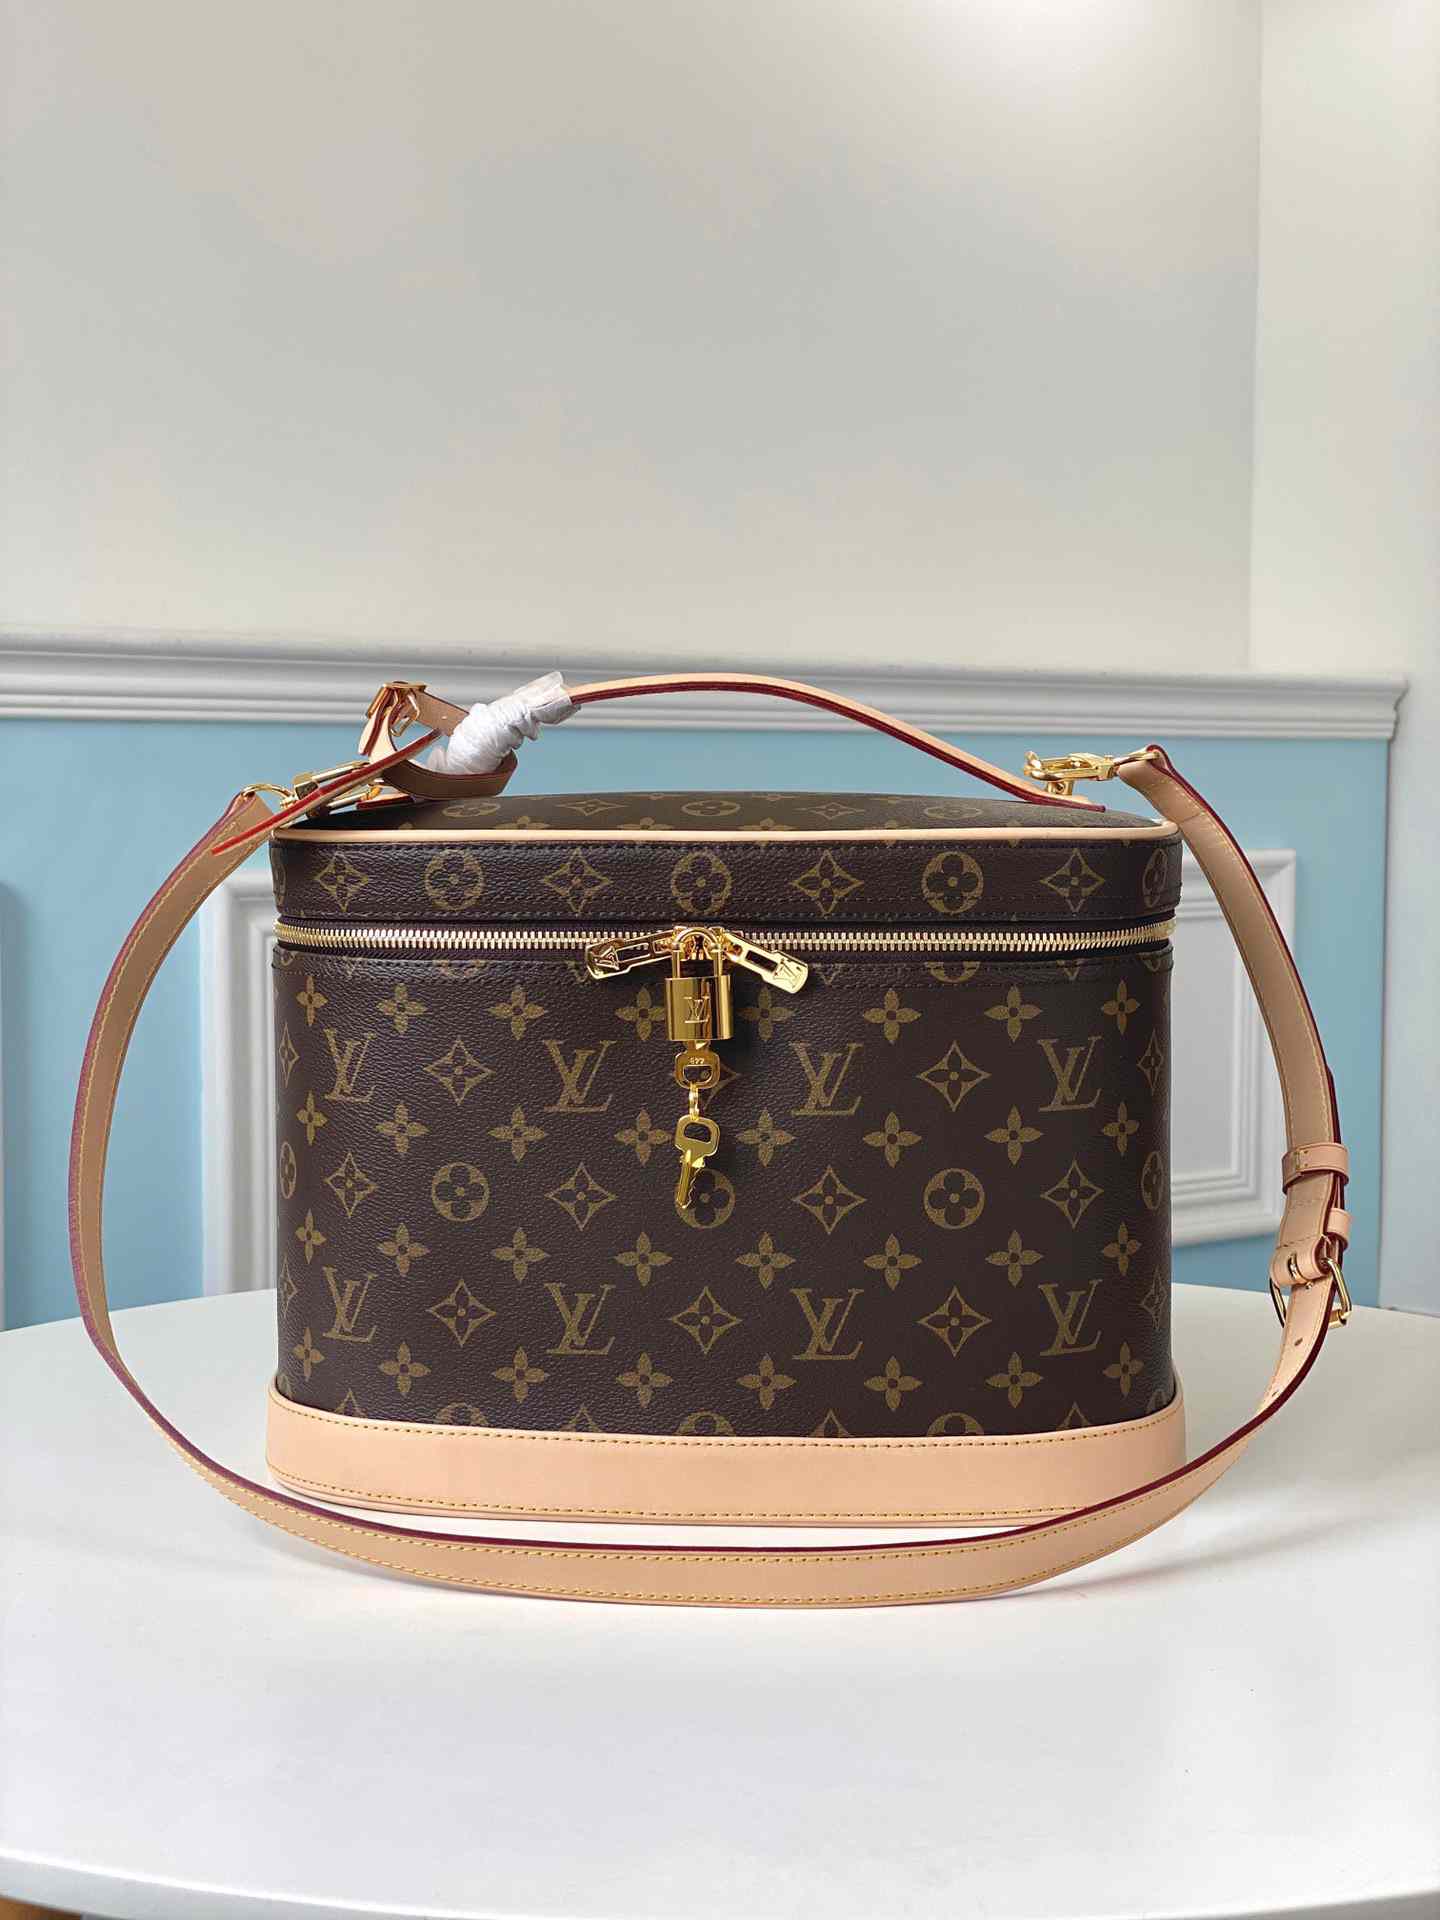 womens big NICE travel cosmetic box M47280 case bag tote makeup purse CROSS body handbag luxury 31X21X20cm